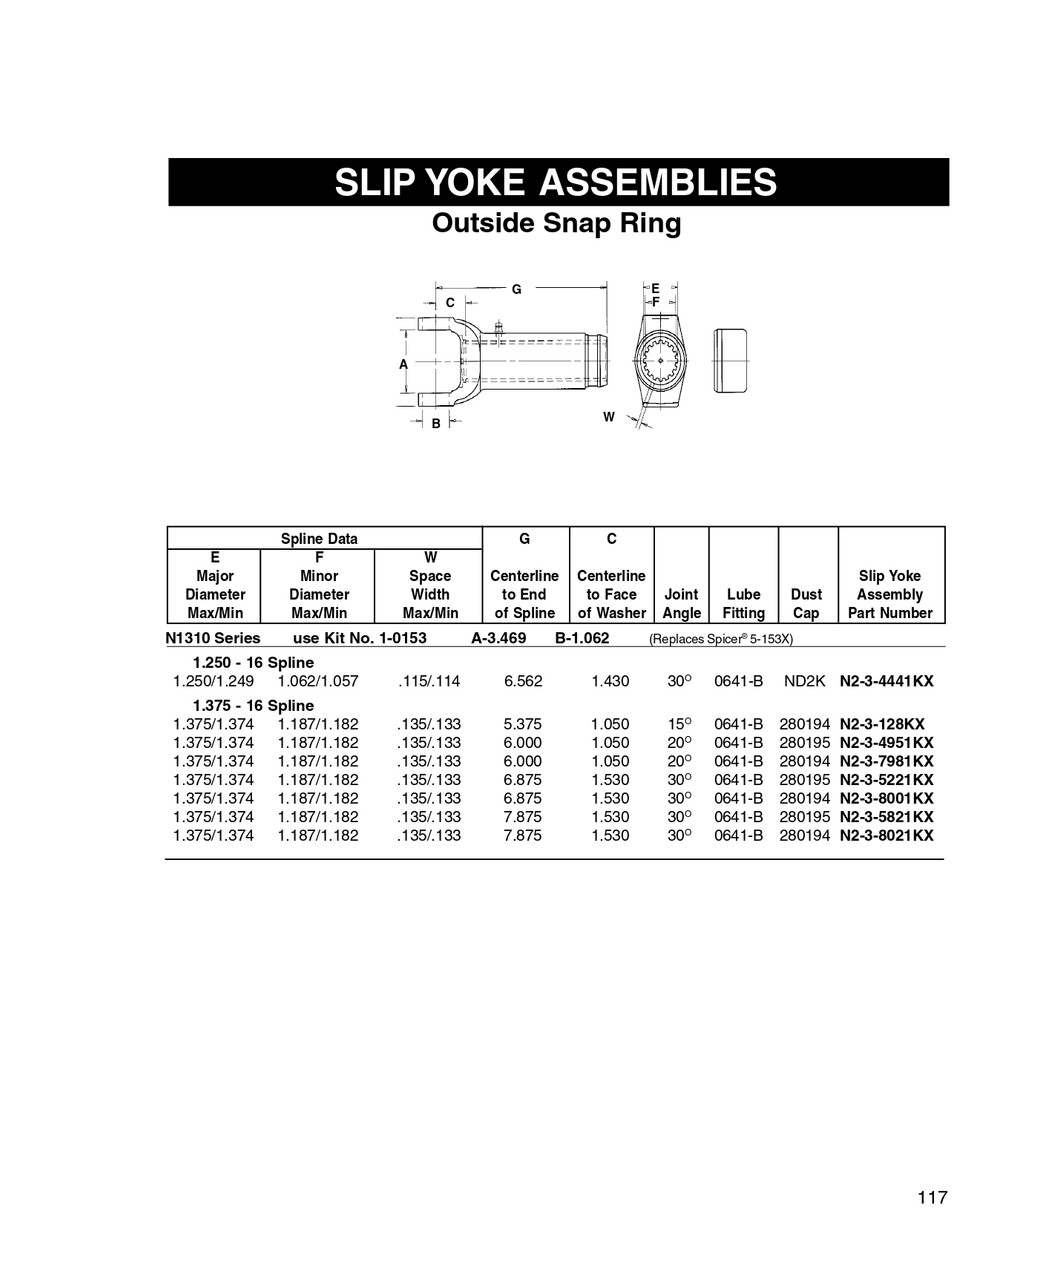 1.375" 16 Spline - Spicer® 1310 Series Slip Yoke  N2-3-5821KX